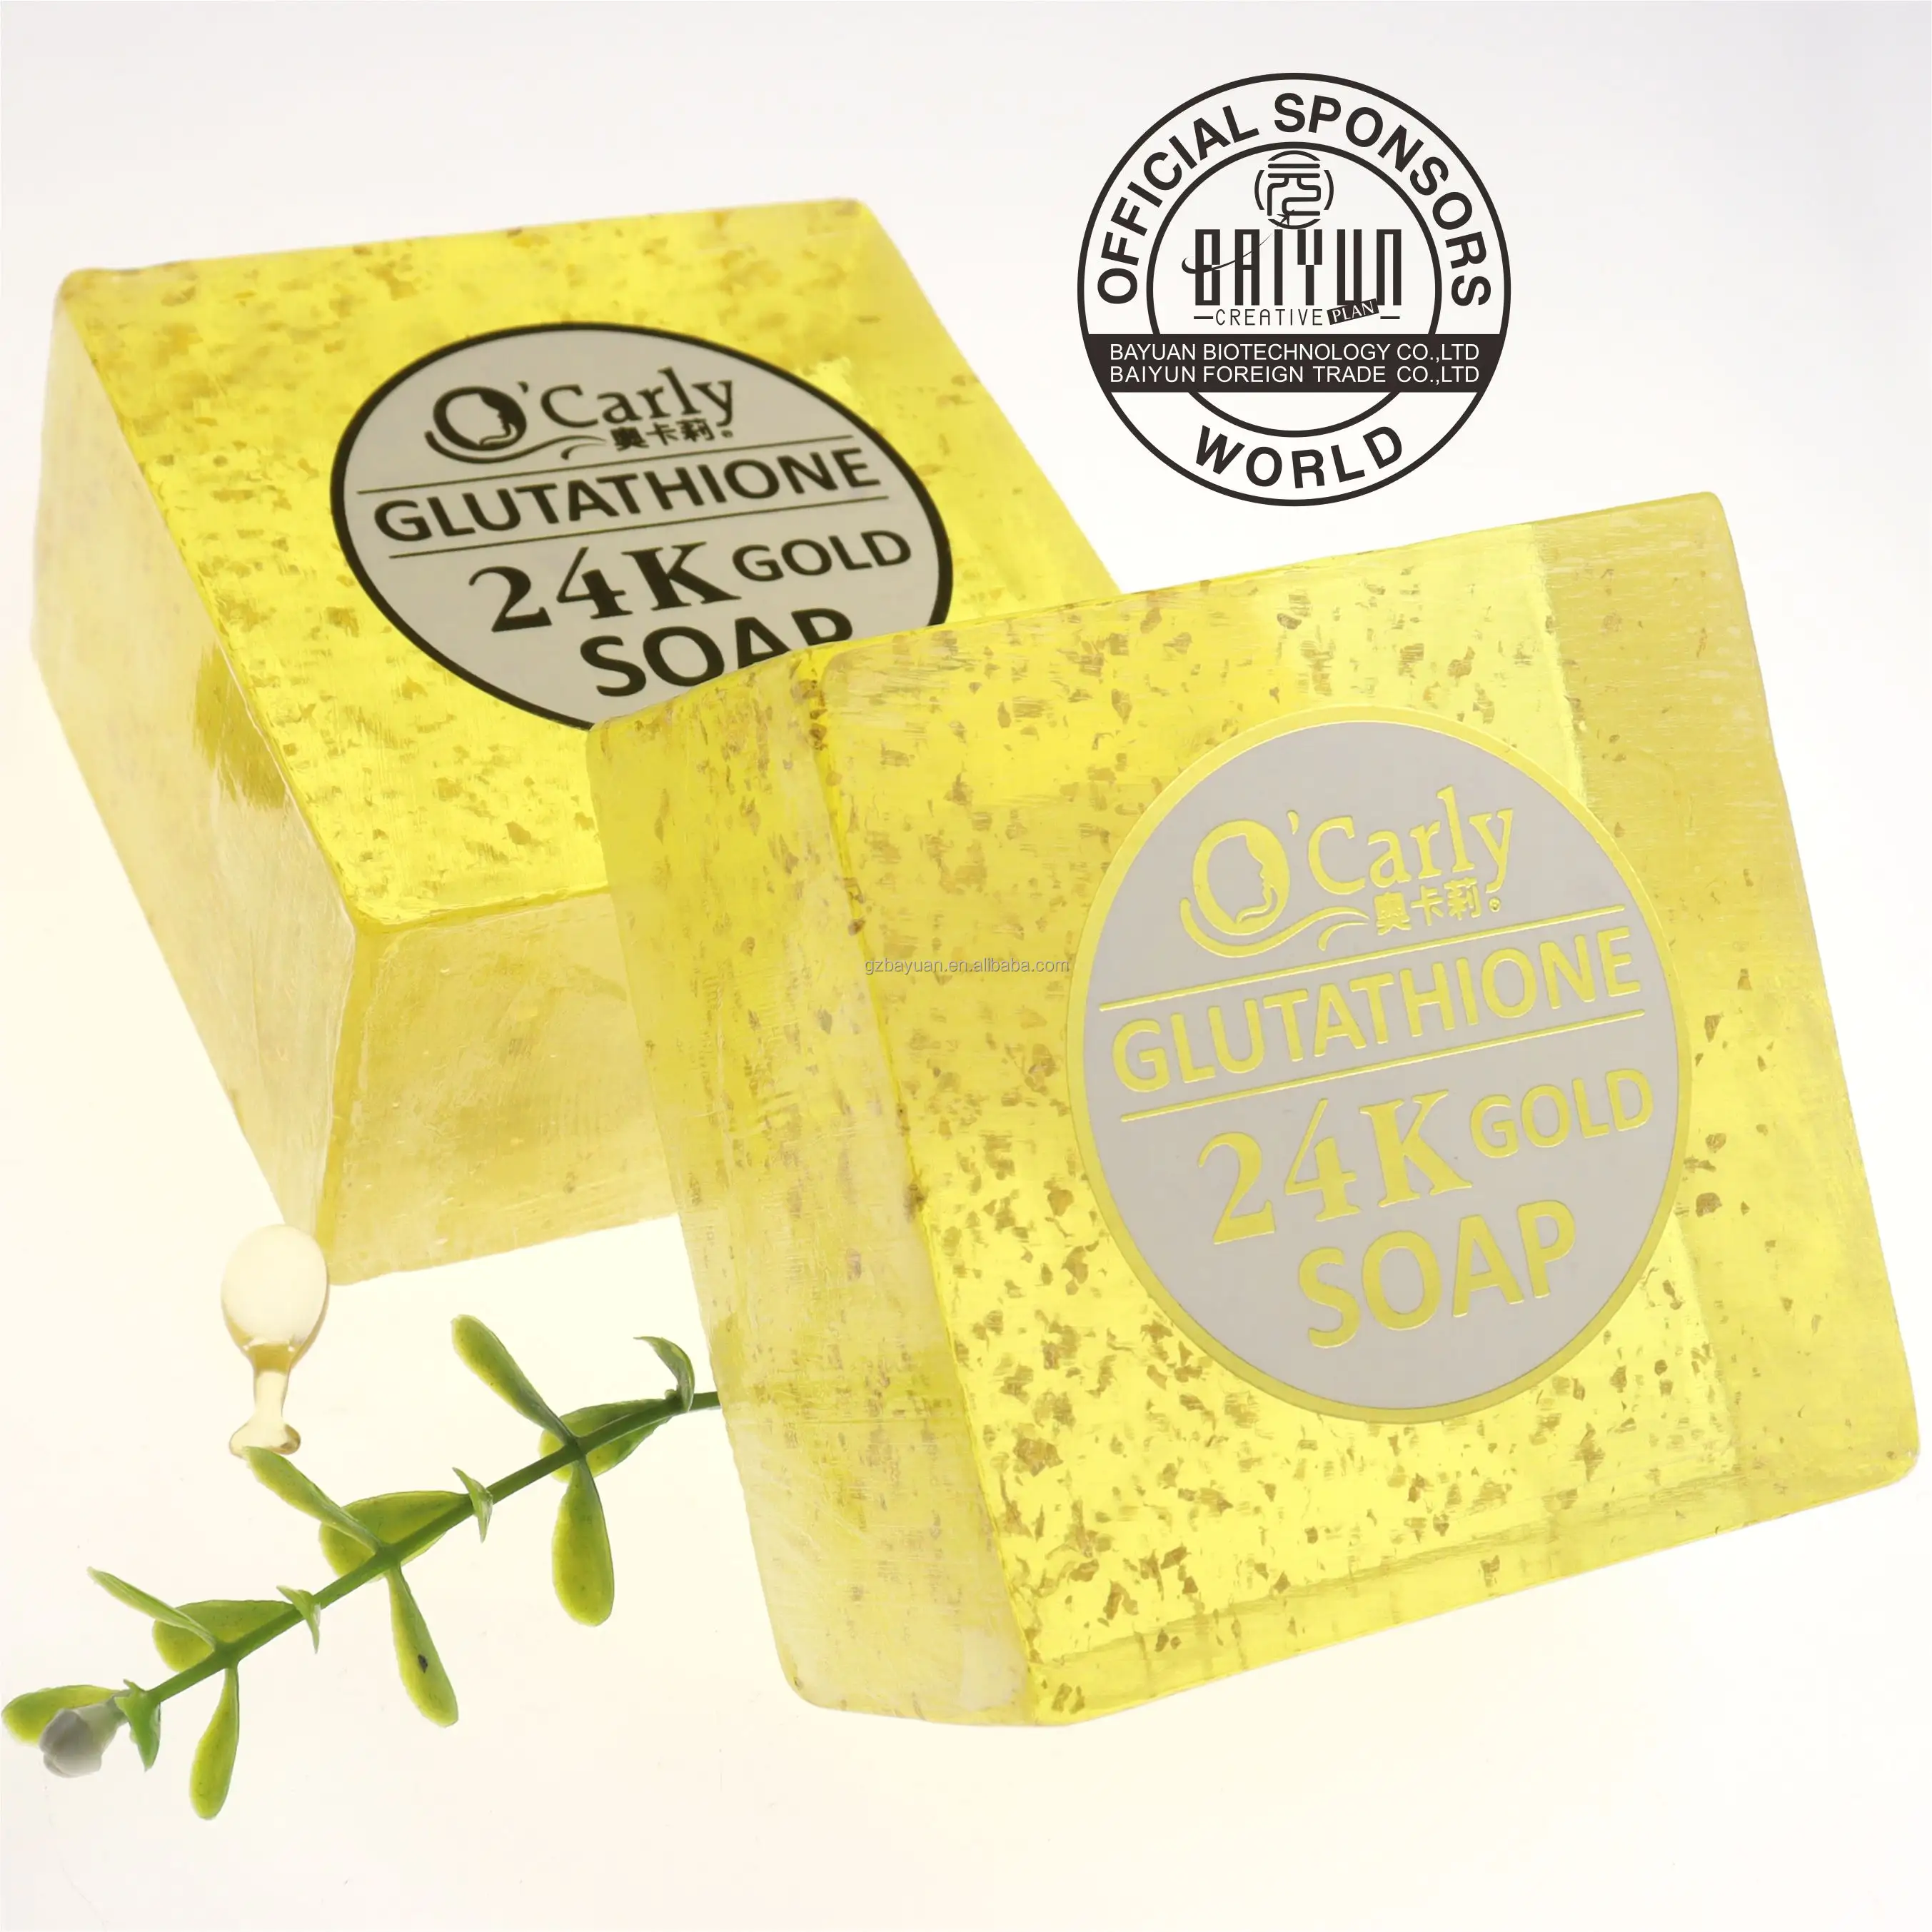 O'Carly skin care glutathion 24K Gold Soap Super White Ligntening perfume beautiful Bath 280g big Handmade Soap OEM LOGO